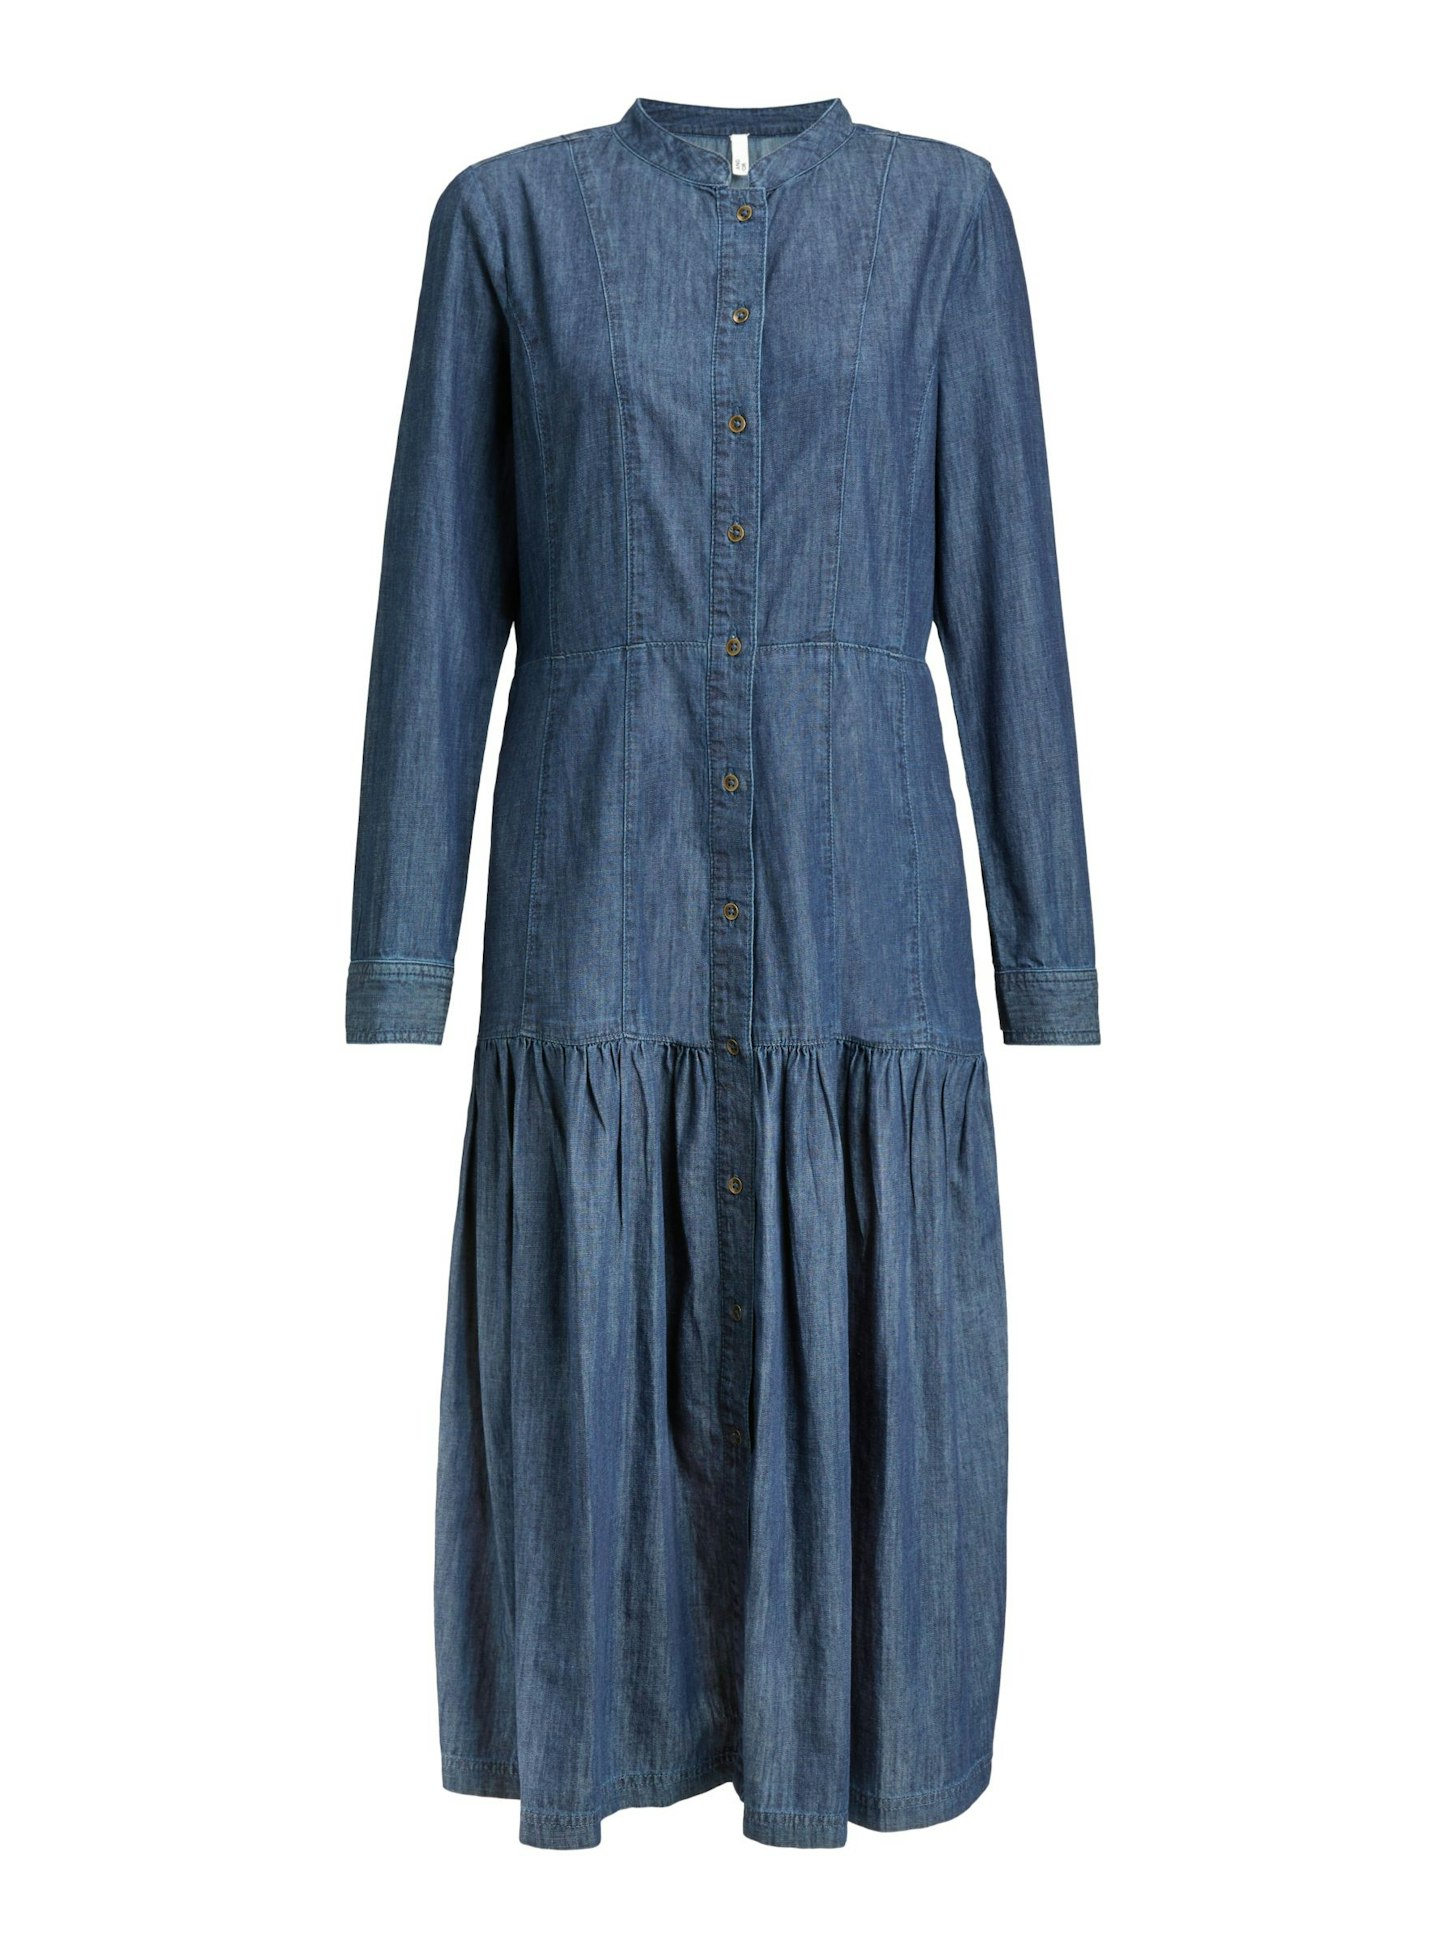 AND/OR, Della Denim Dress, £89 at John Lewis & Partners